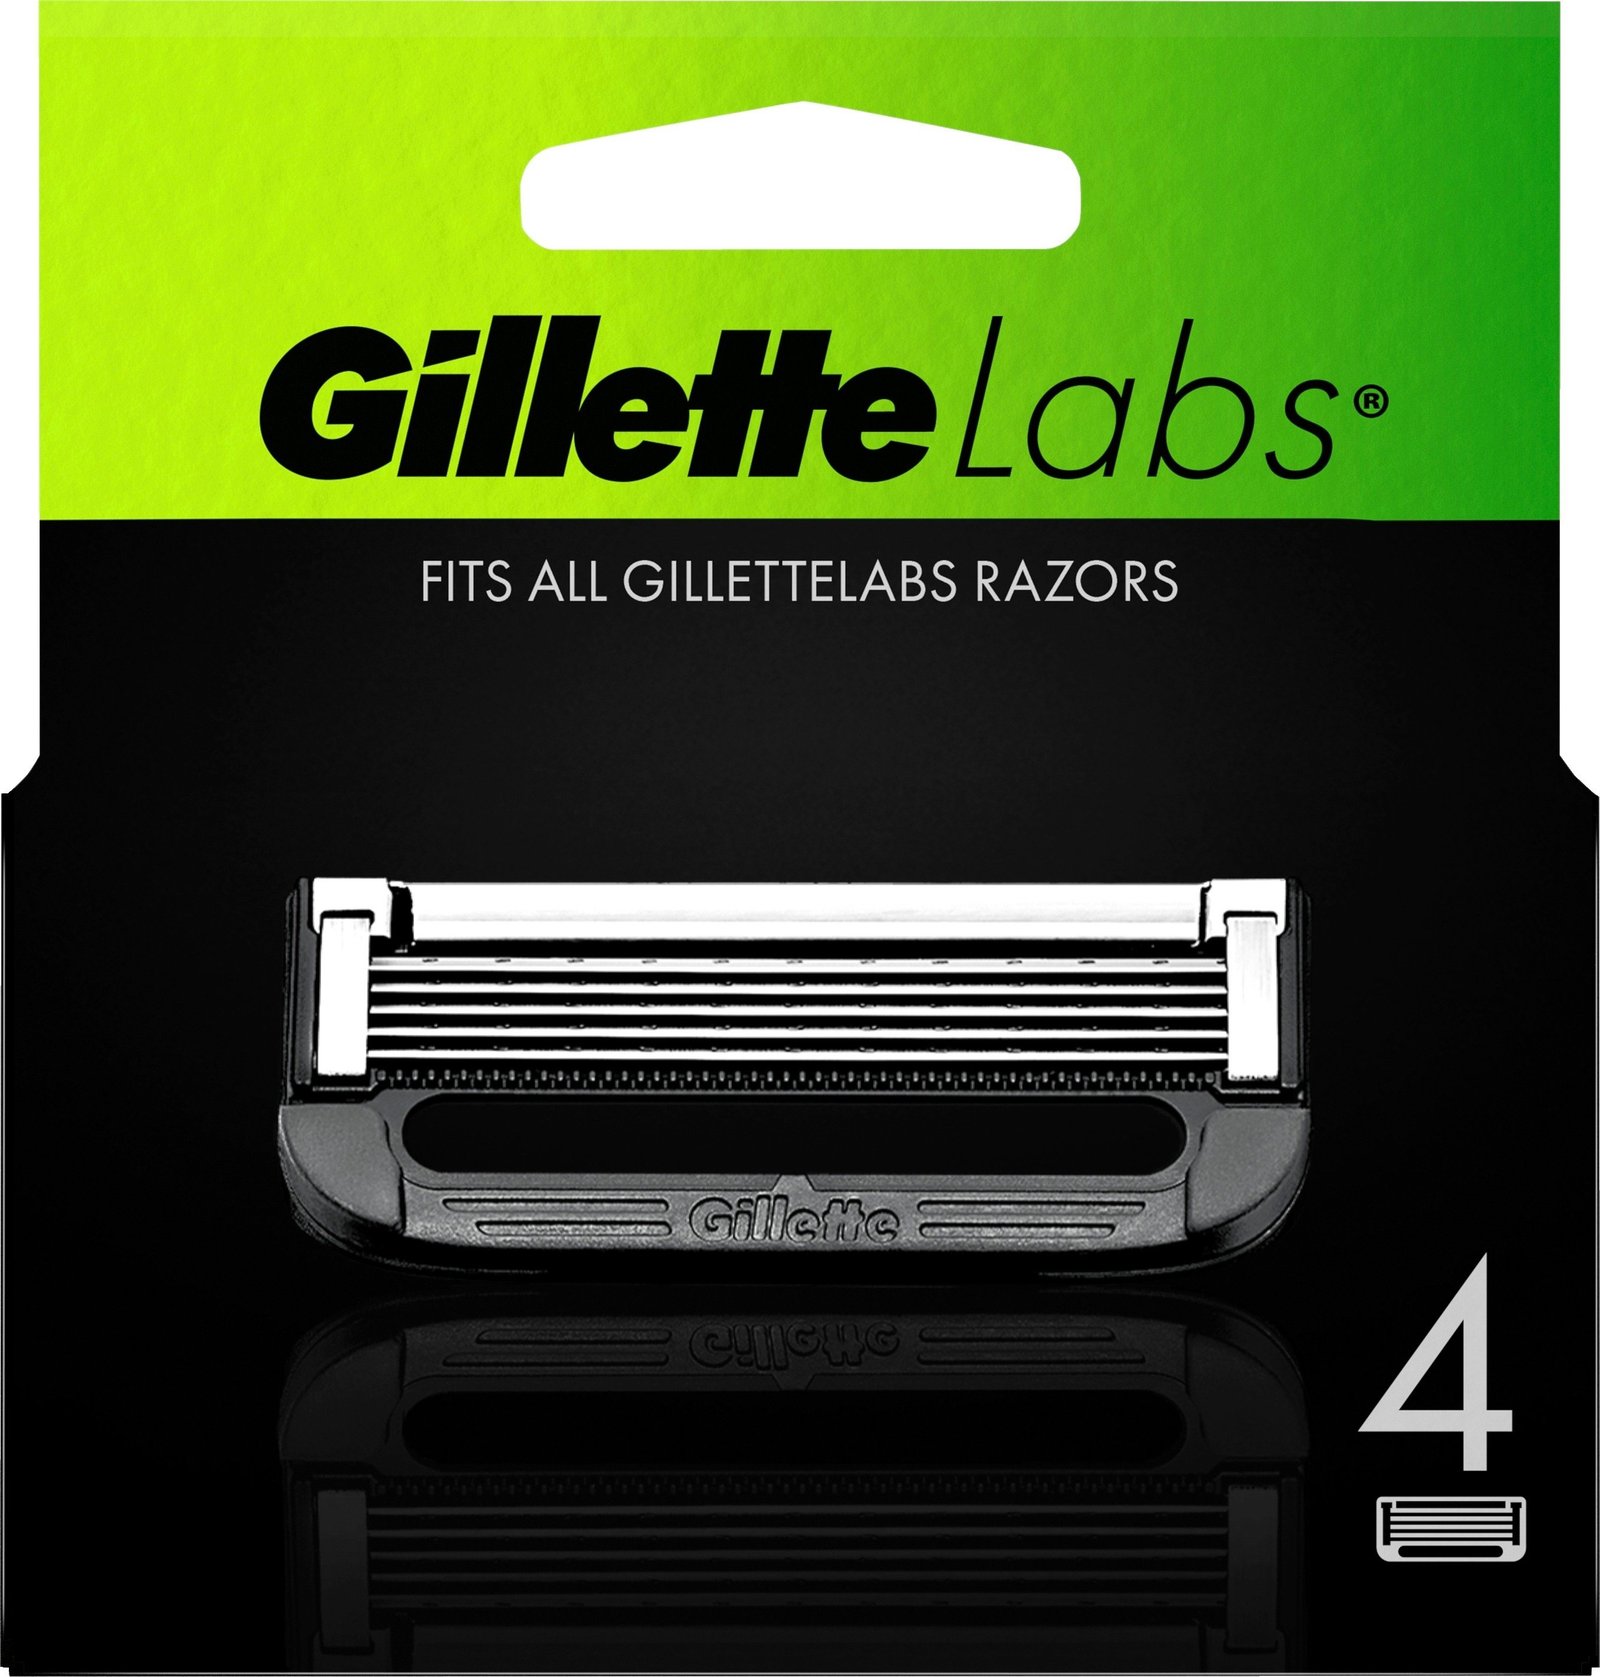 Gillette Labs Rakbladsrefill 4 st